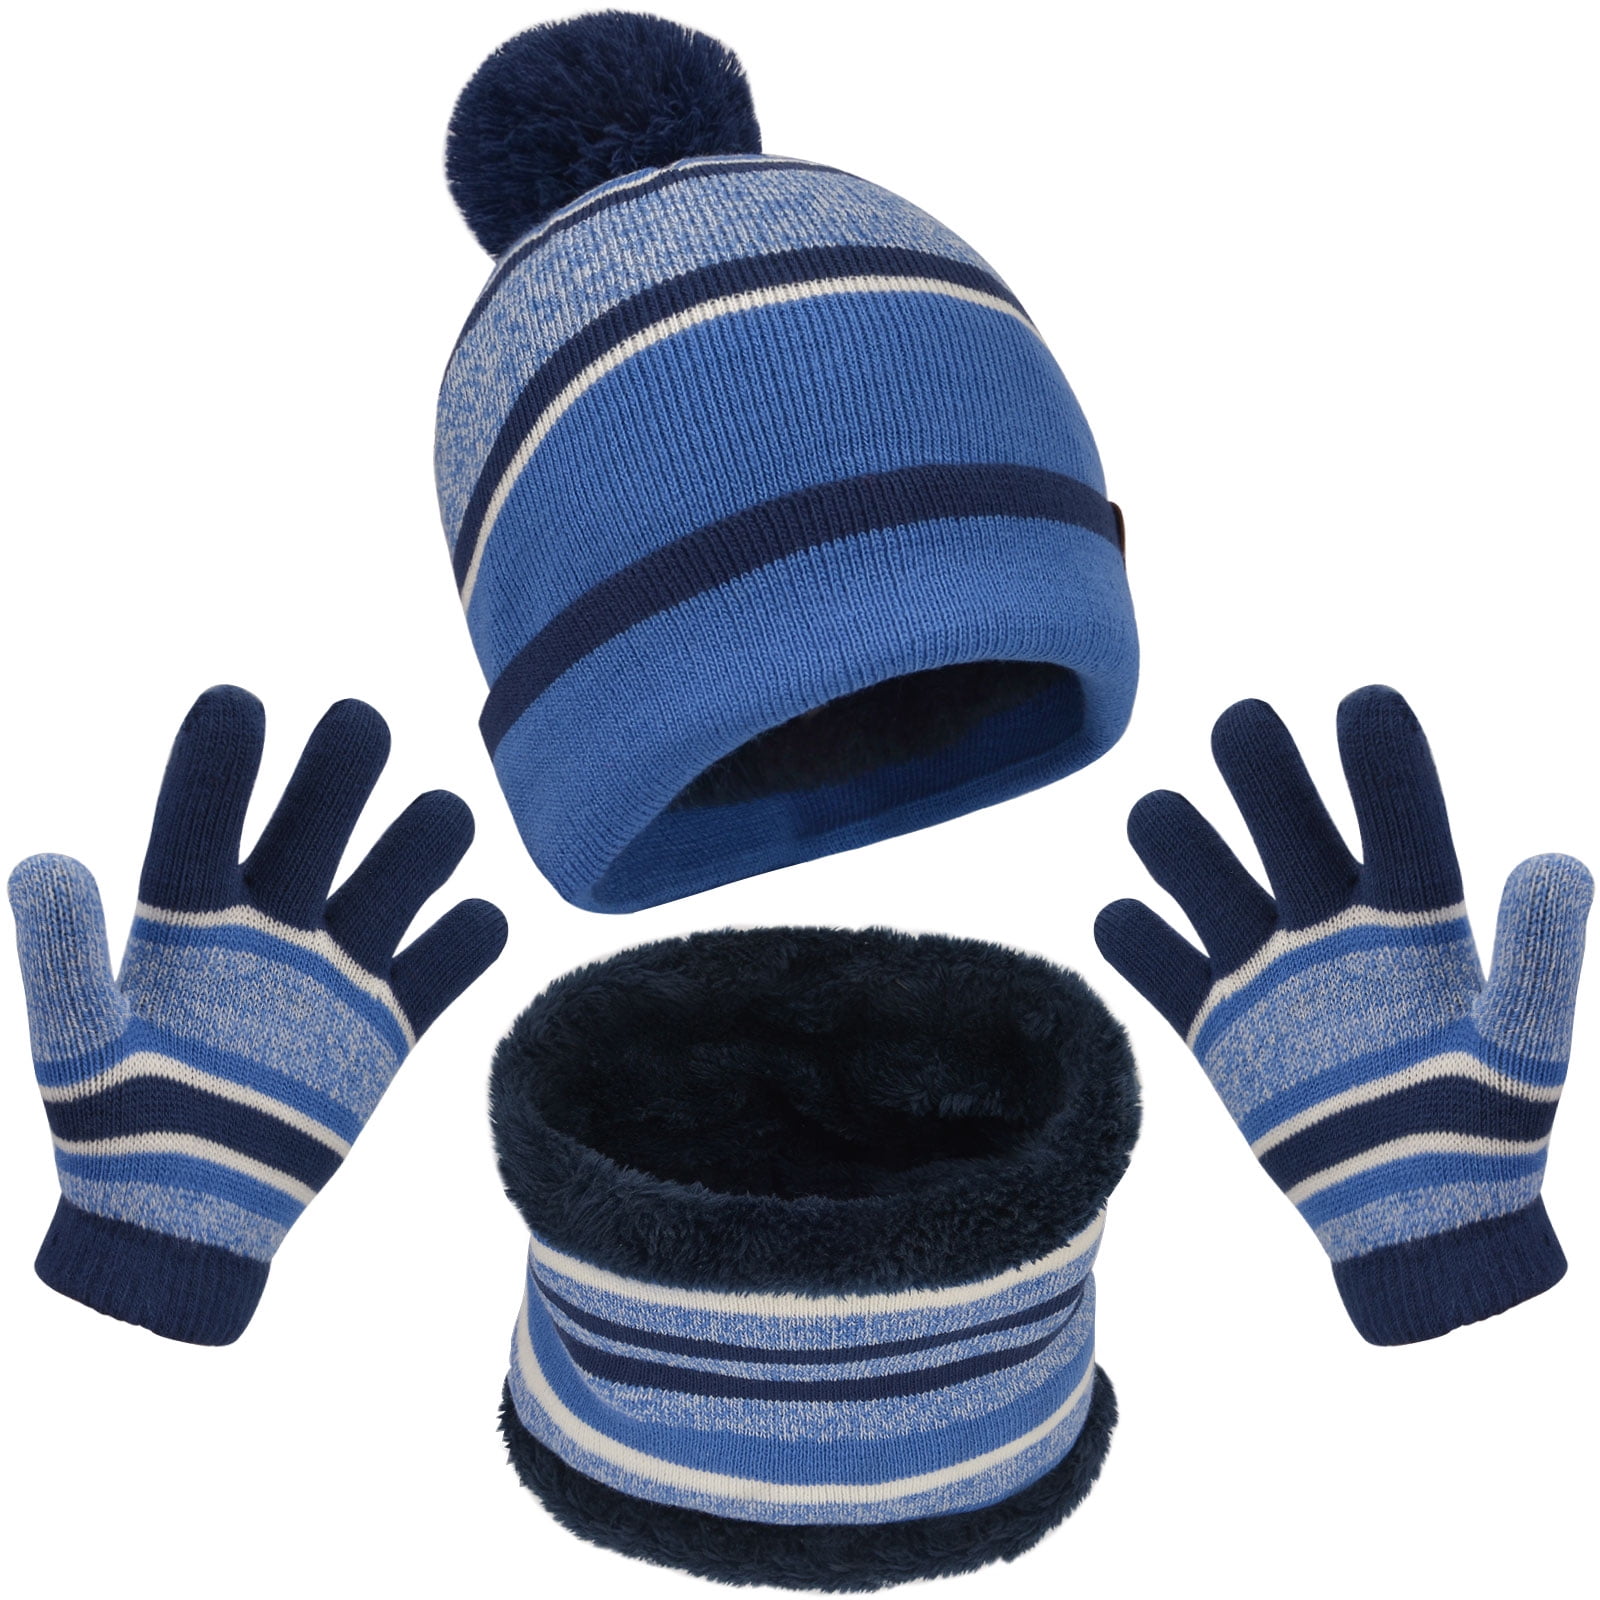 heekpek Winter Beanie Hat Scarf Gloves Set Knitted Pompom Stripped for Kids Boys Girls 3-6 Year Old 